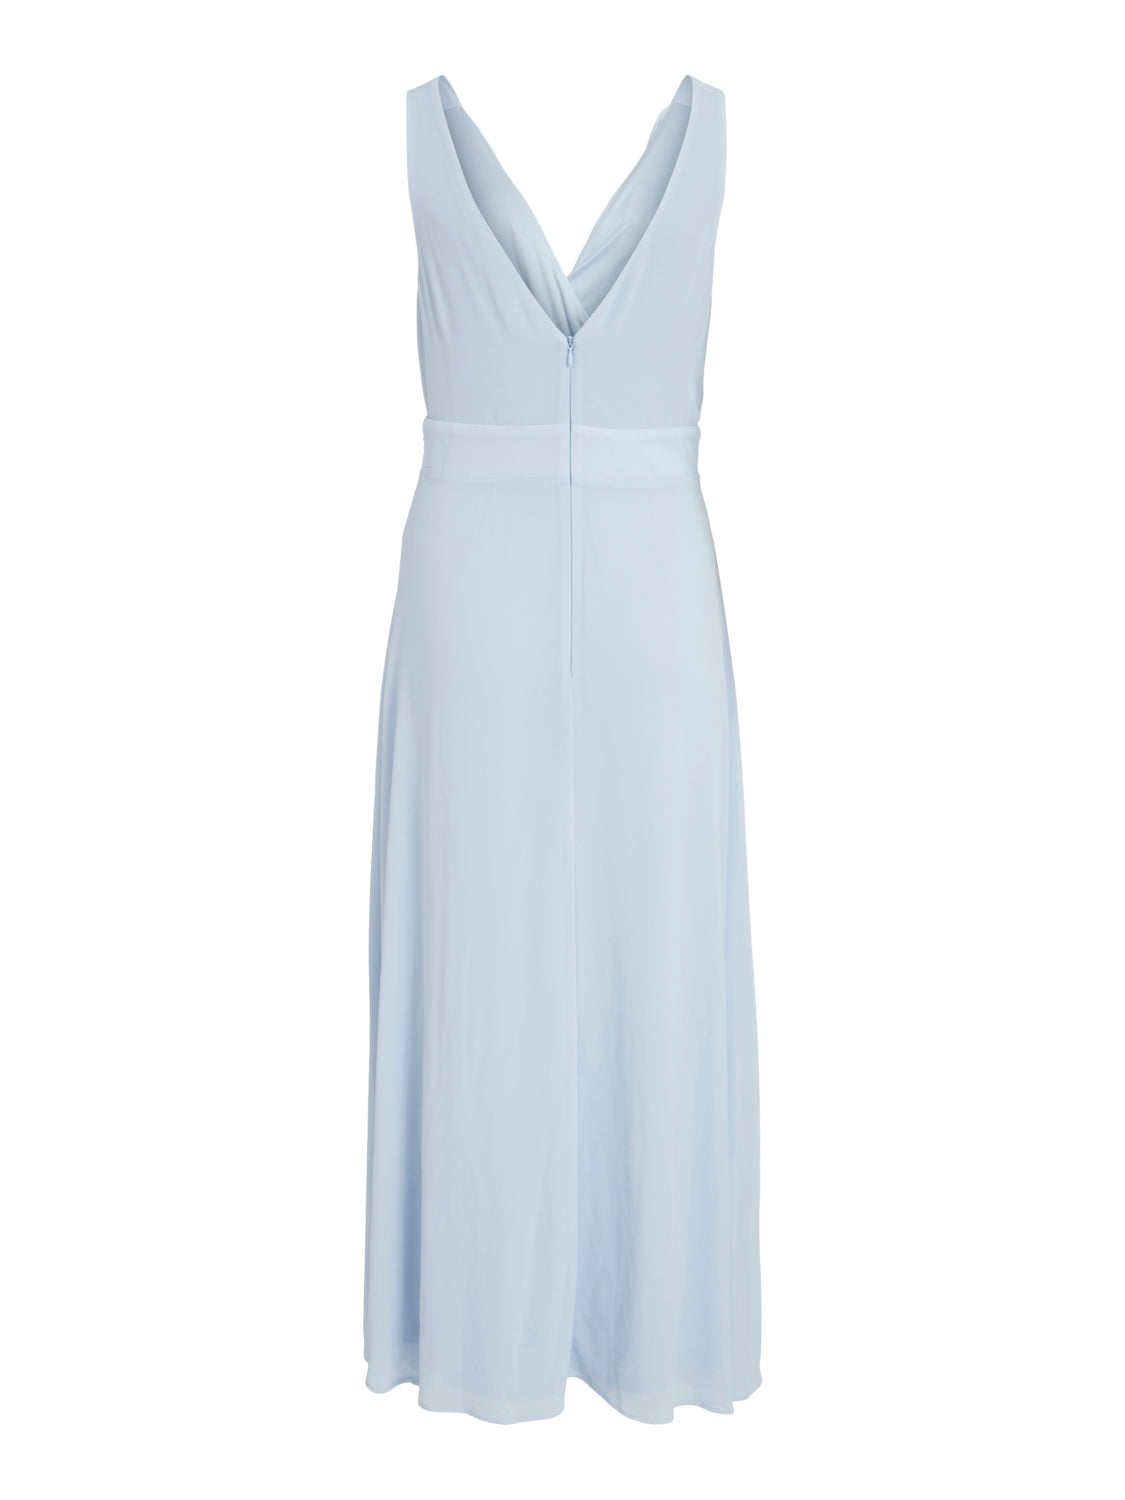 VIMICADA Dress - Kentucky Blue